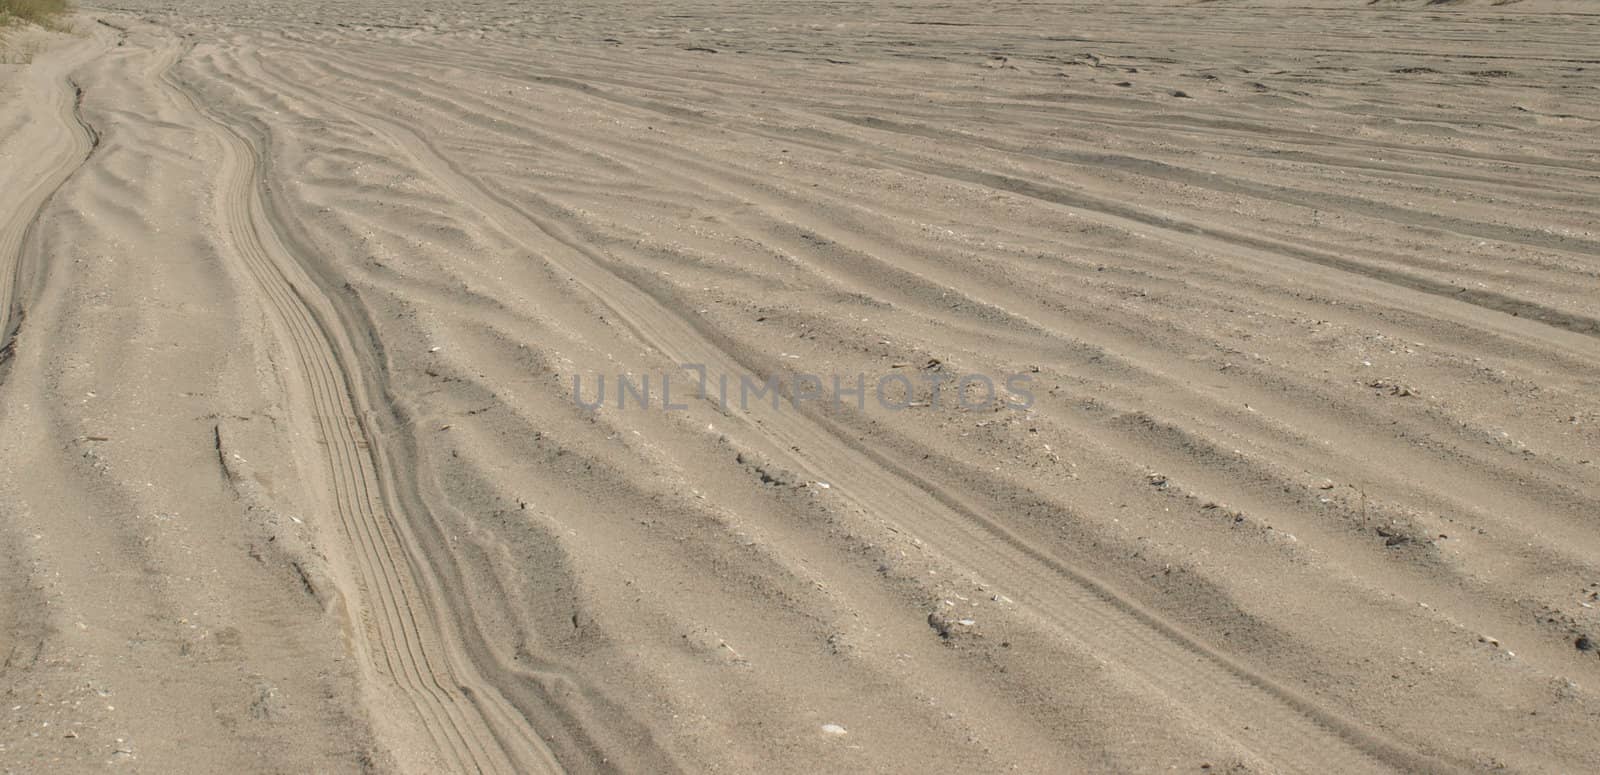 desert tracks by northwoodsphoto